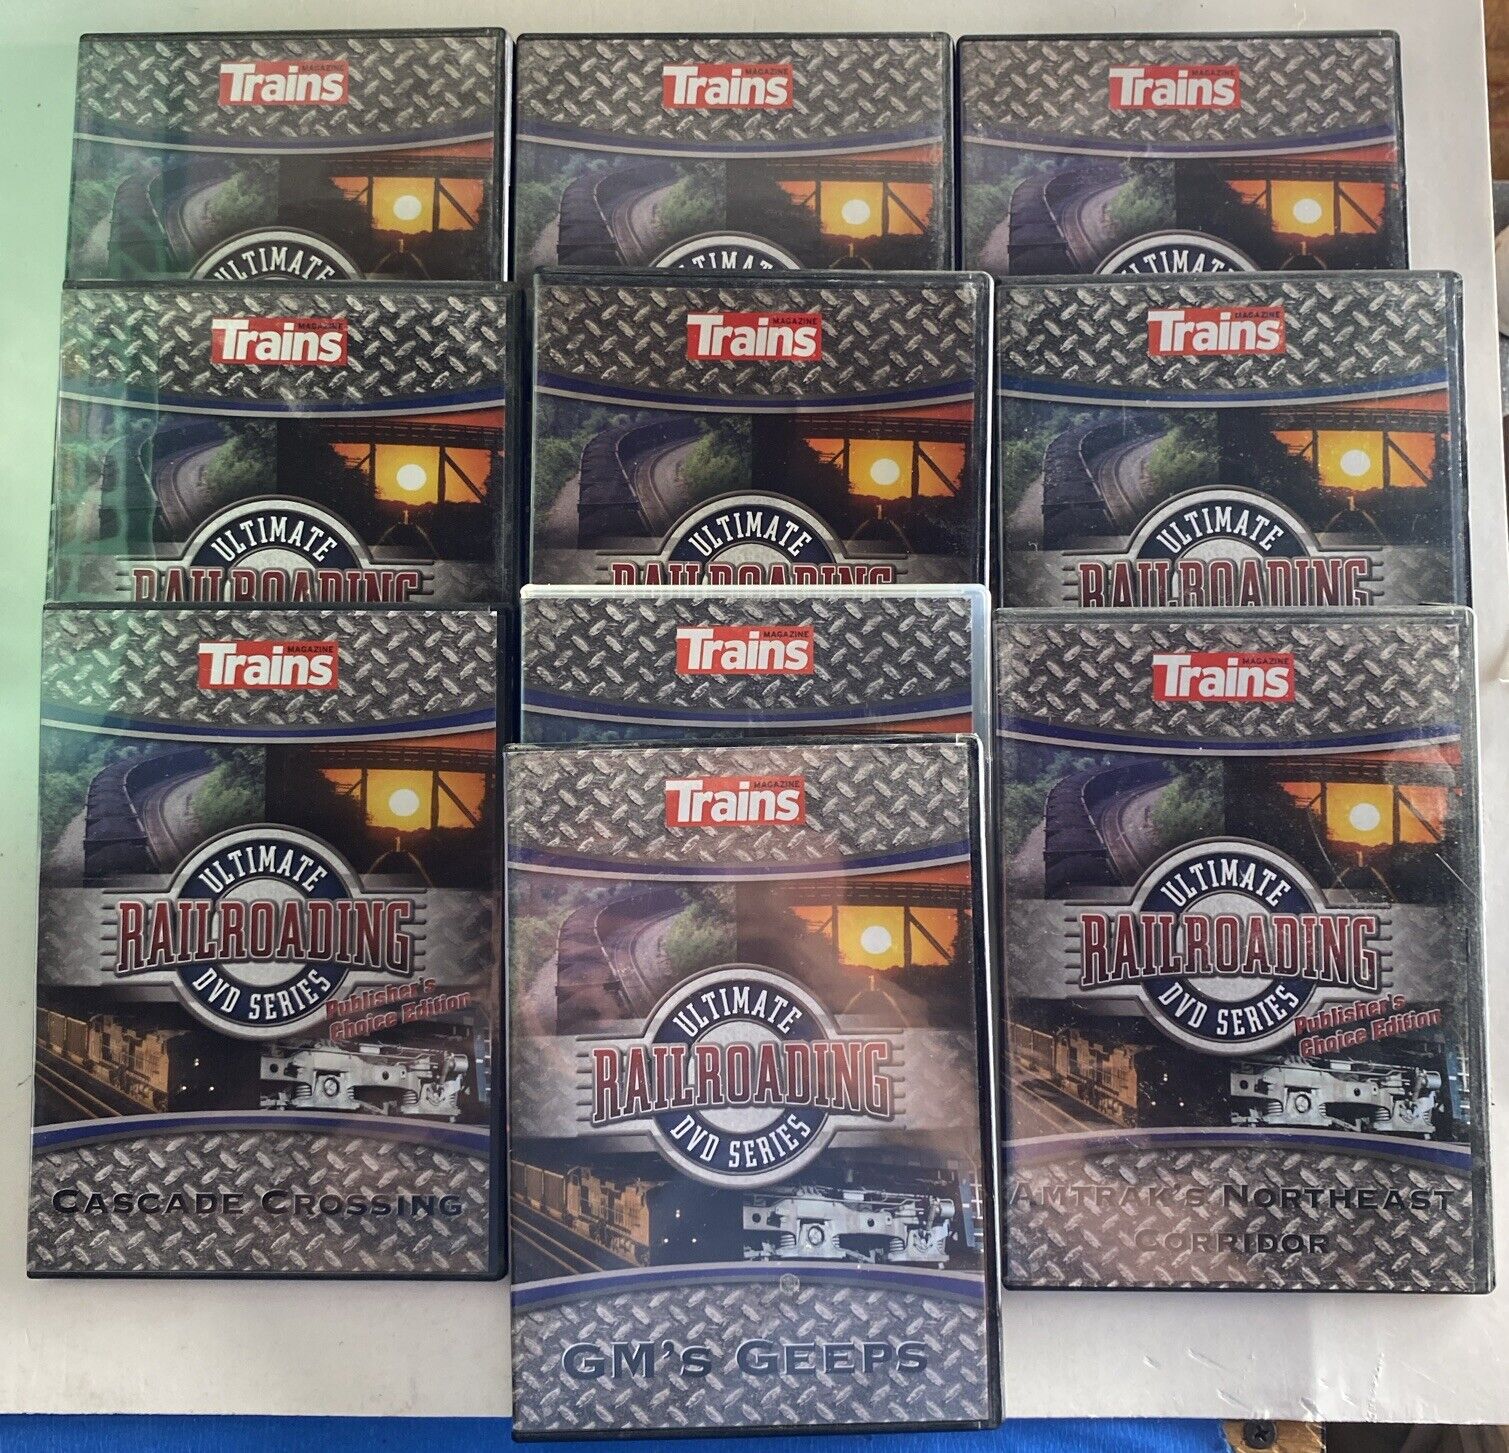 Trains Magazine Ultimate Railroading DVD Series Lot of 10